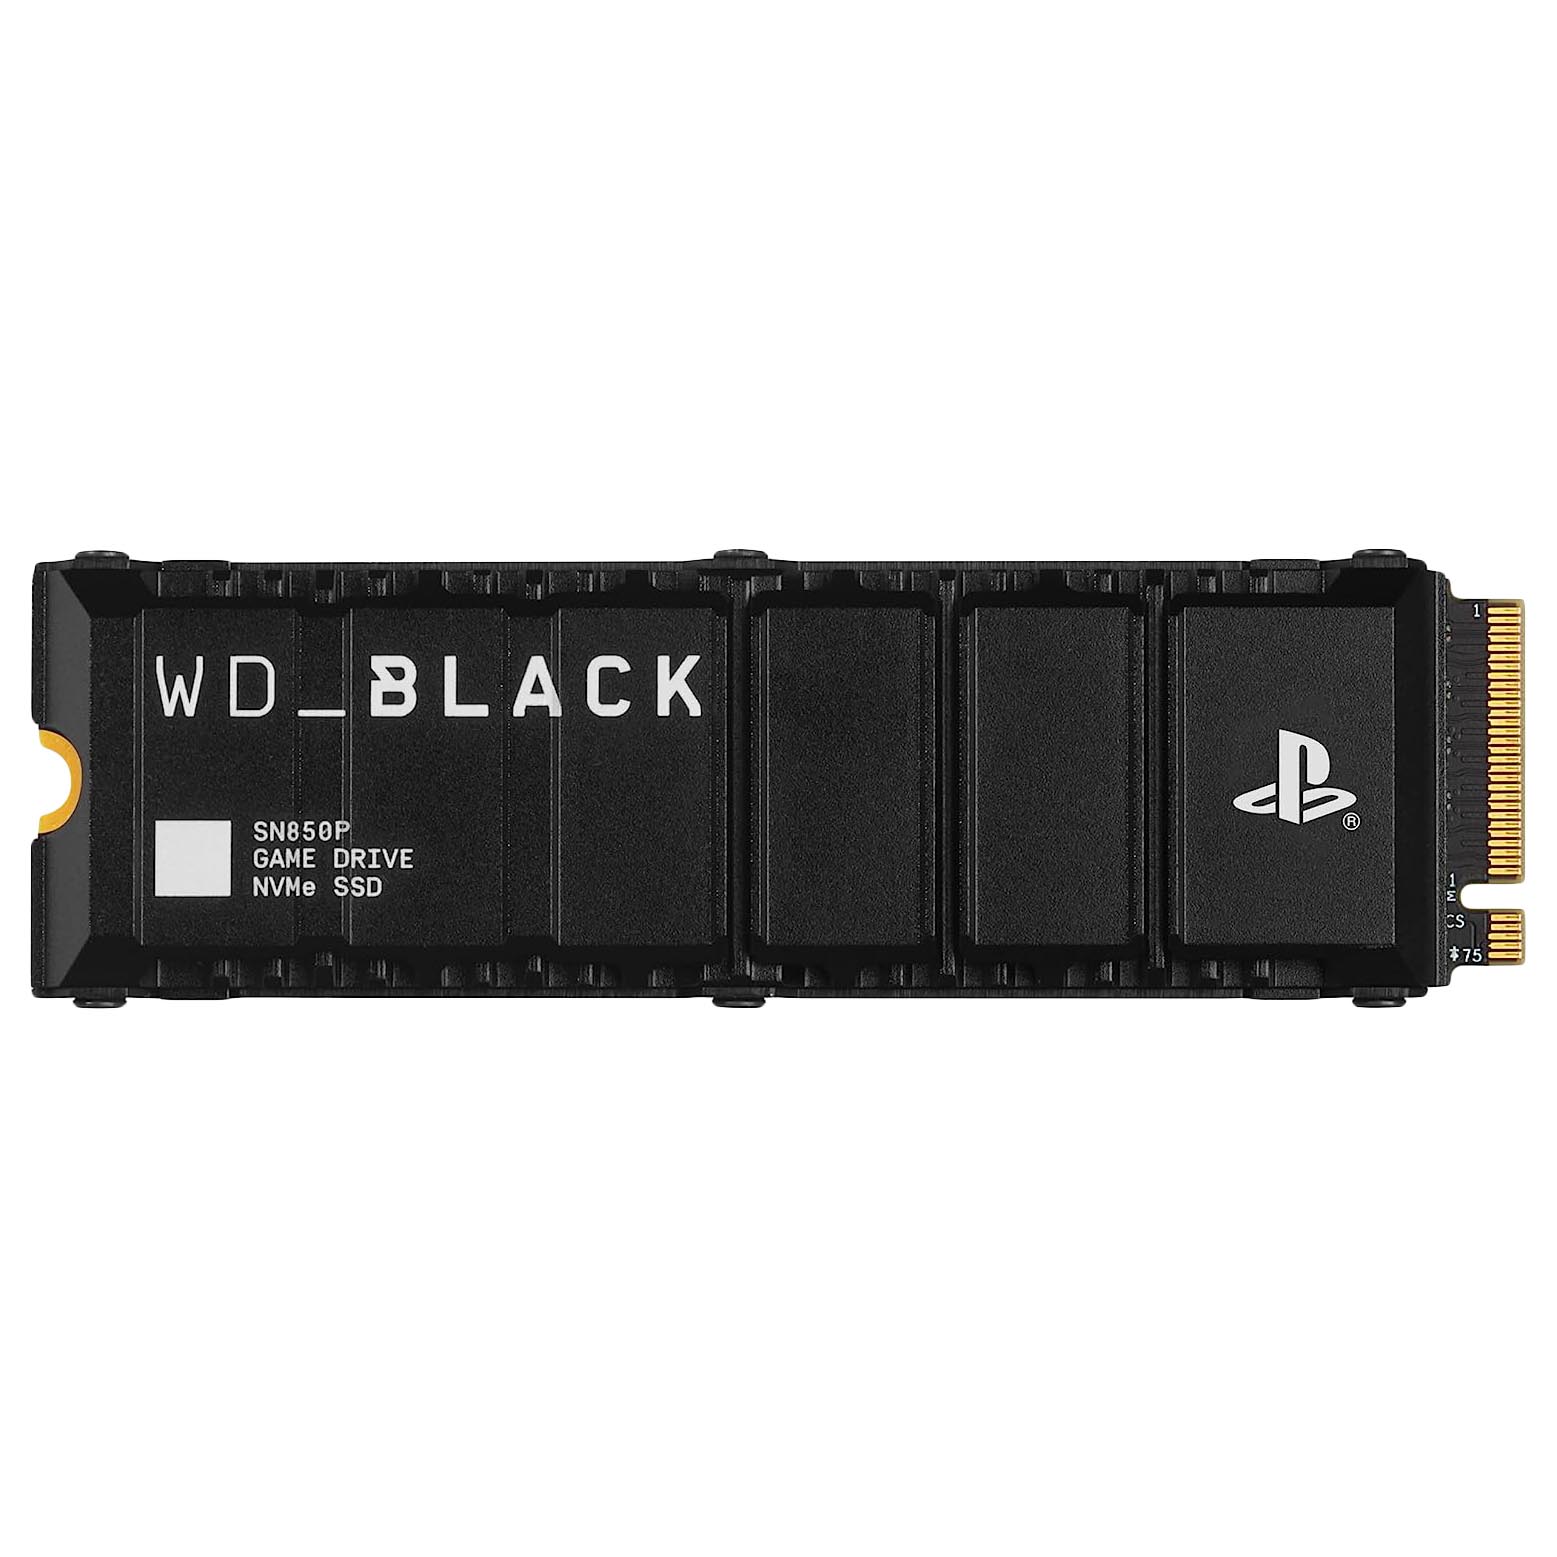 Внутренний твердотельный накопитель Western Digital WD Black SN850P PS5, WDBBYV0040BNC-CRSN, 4Тб, M.2 2280 адаптер playstation camera vr для ps5